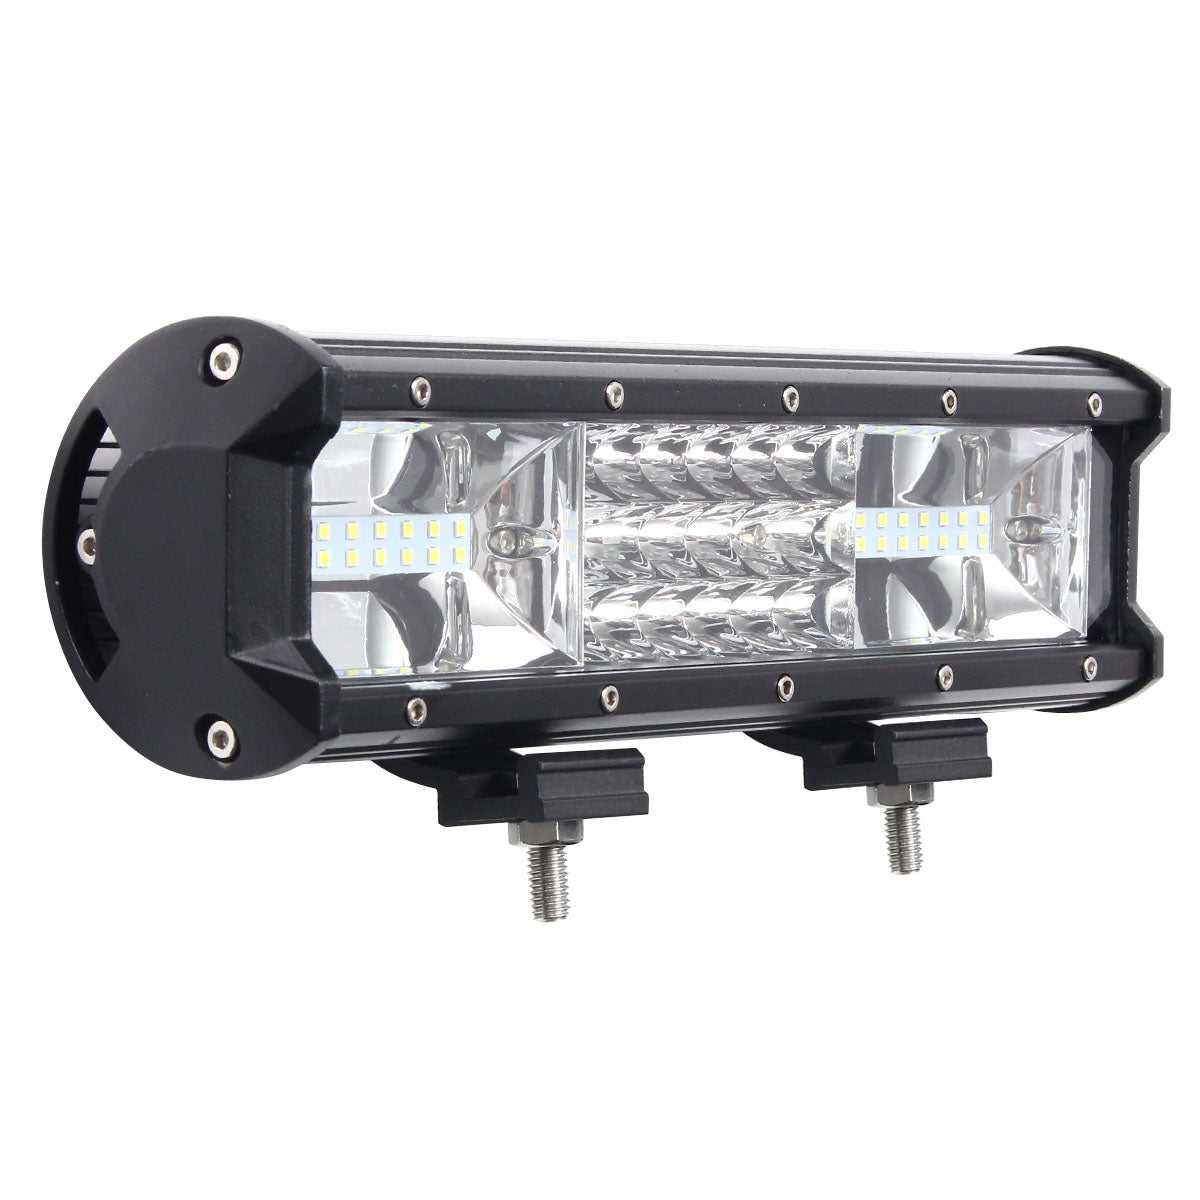 Dark Gray 12Inch 324W LED Work Light Bar Flood Spot Combo Beam For Off Road Truck SUV 10-30V Waterproof IP68